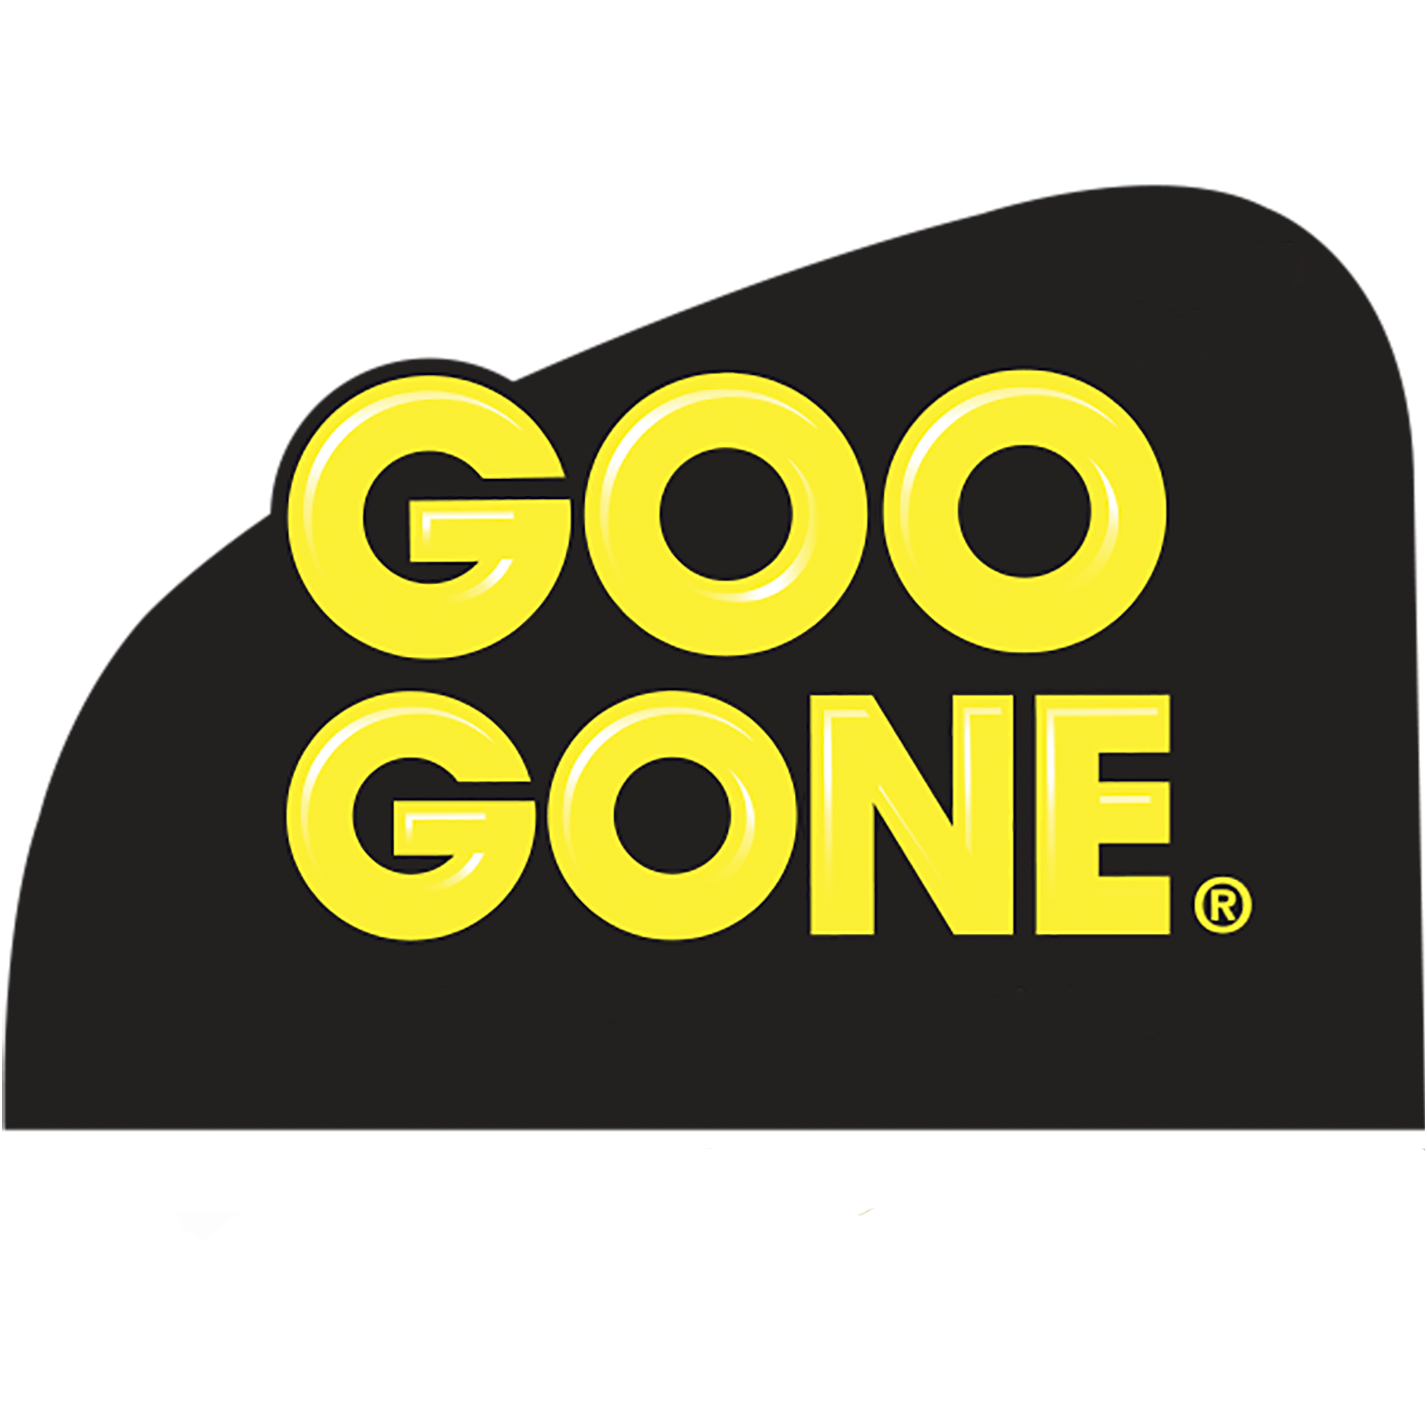 goo gone.png